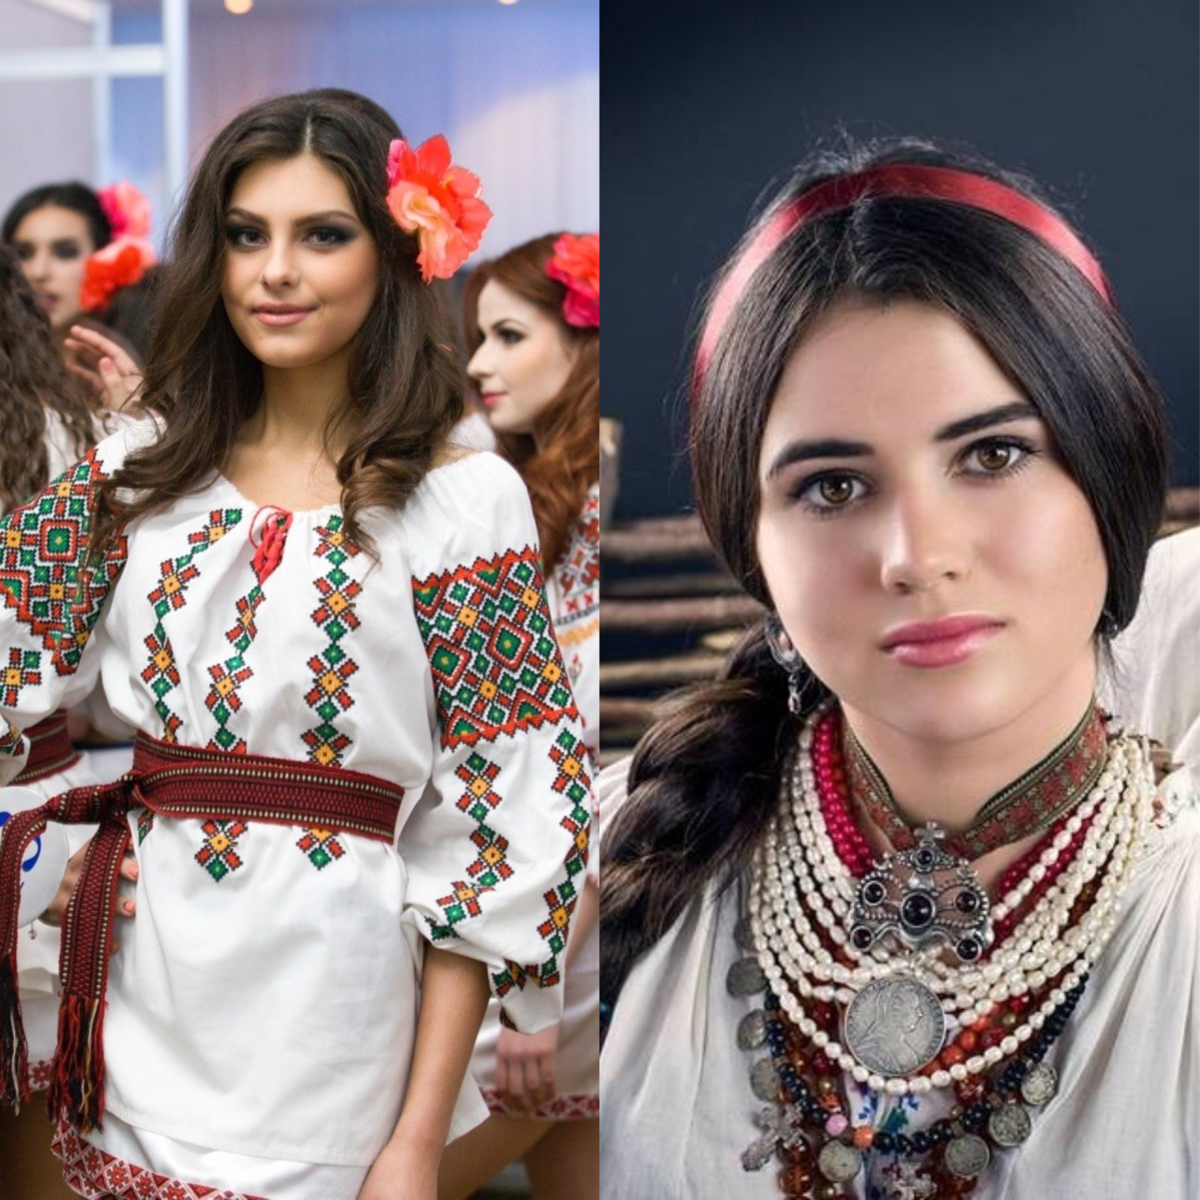 Румыны фото. Молдован внешность молдаван. Болгары раса. Румыны и болгары.